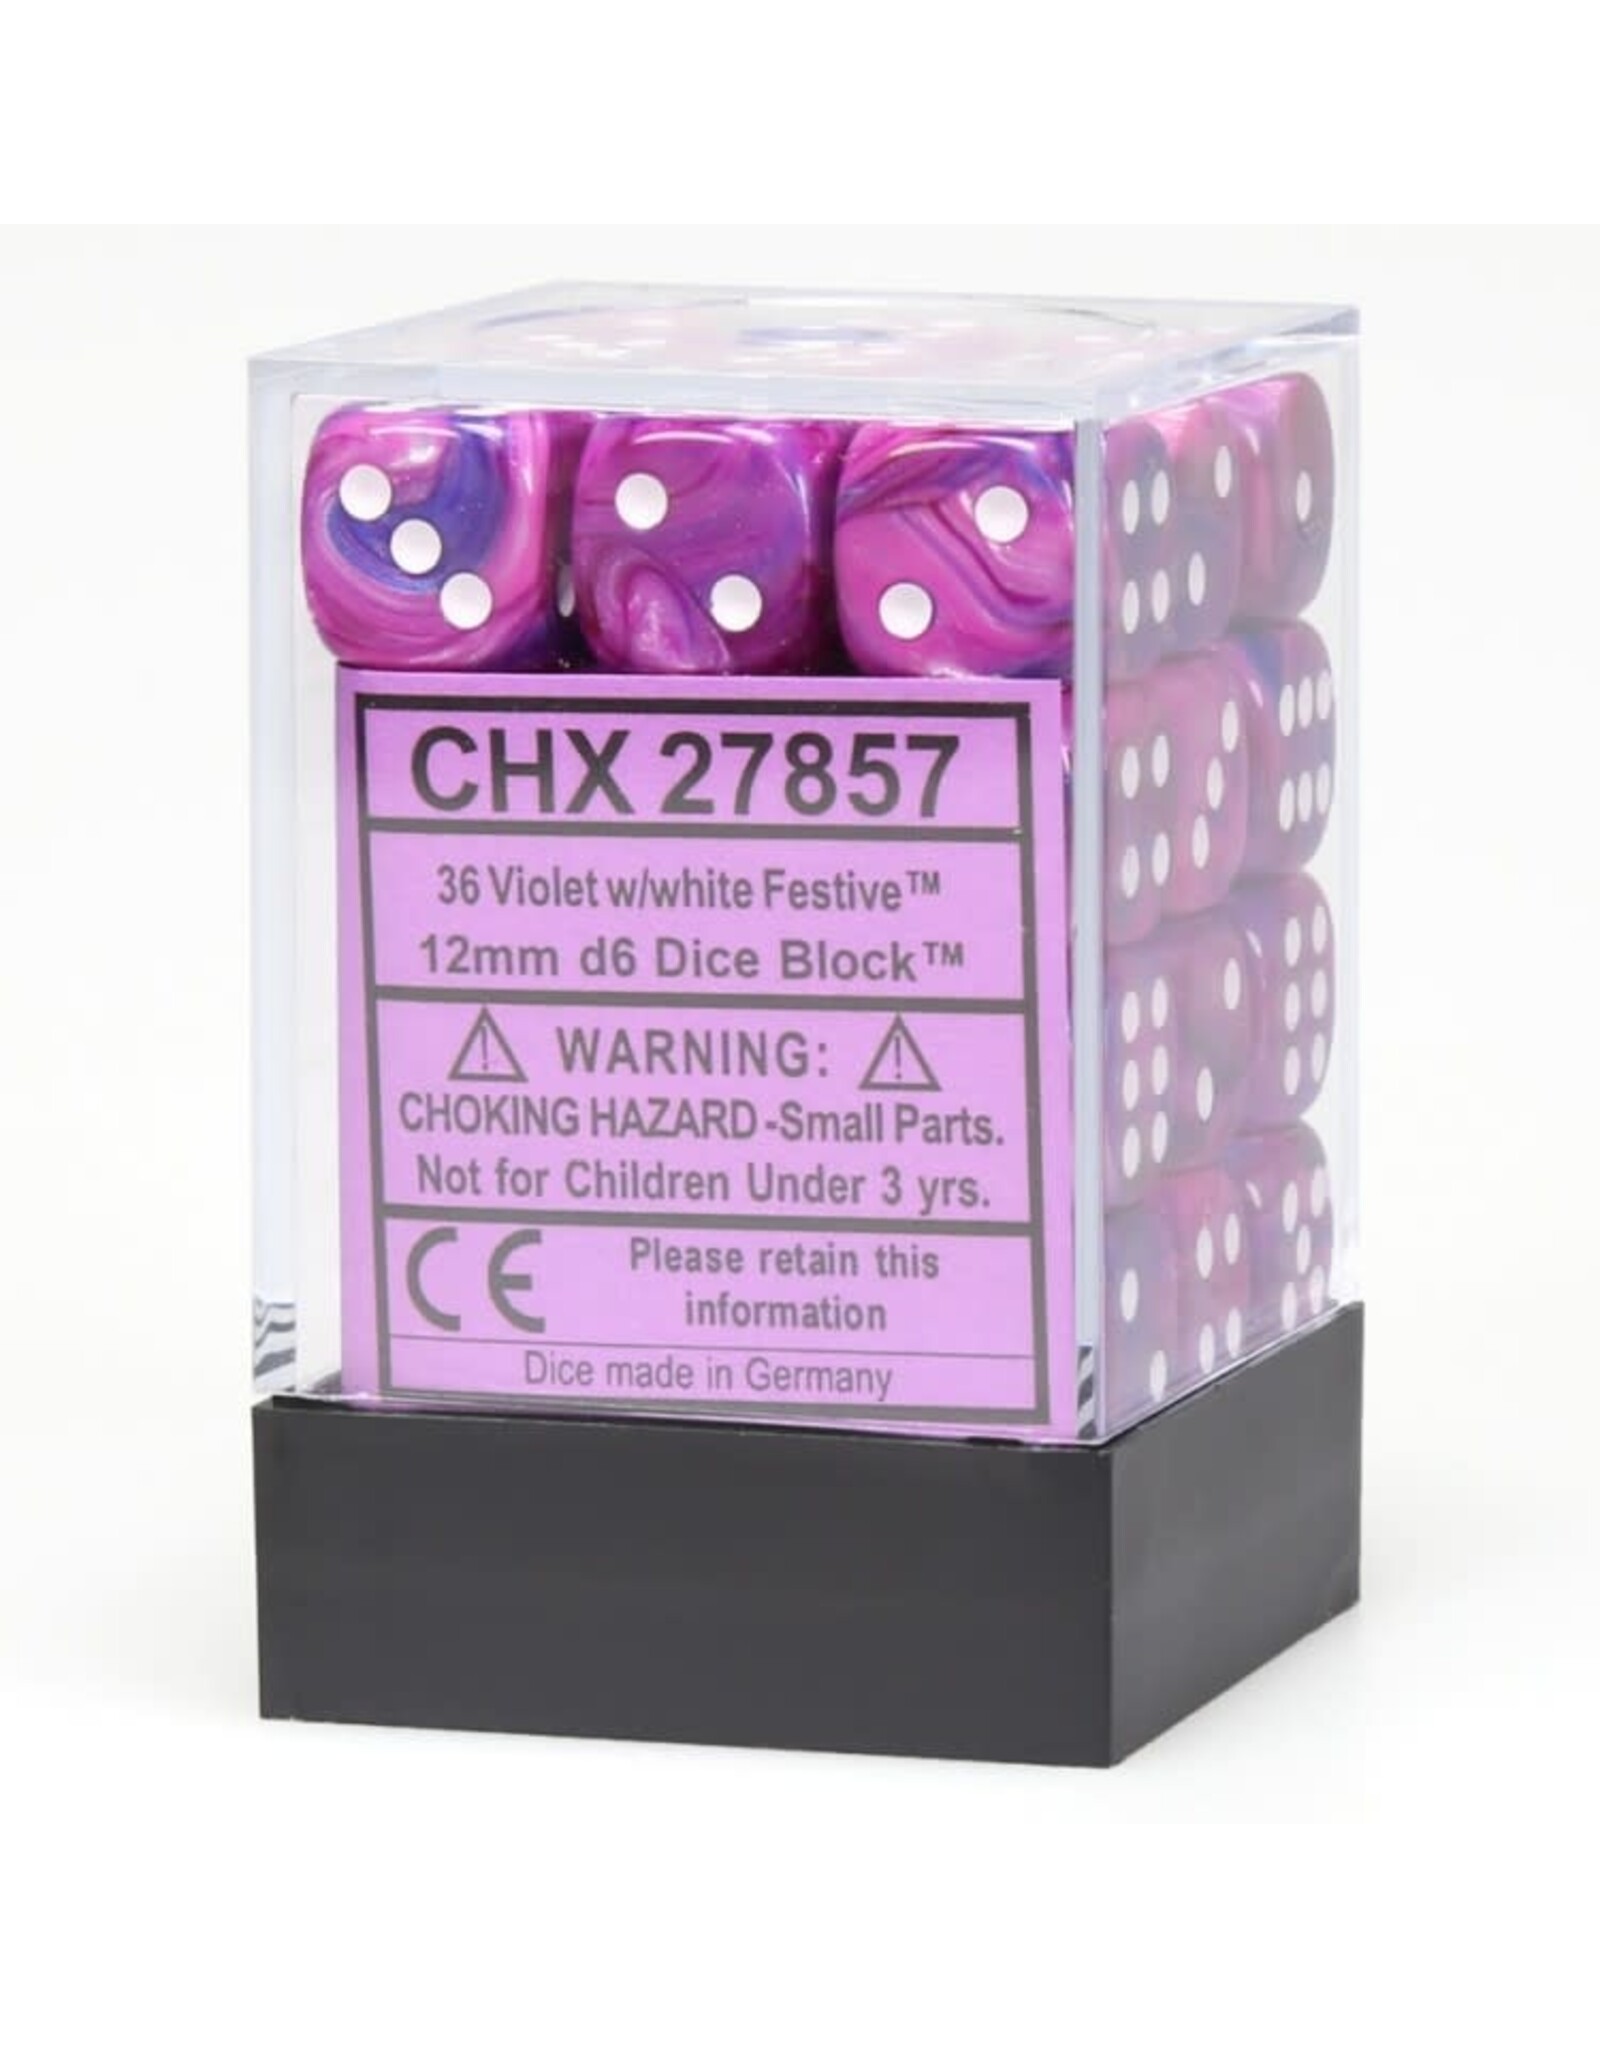 Chessex Violet w/white Festive 12mm d6 dice set